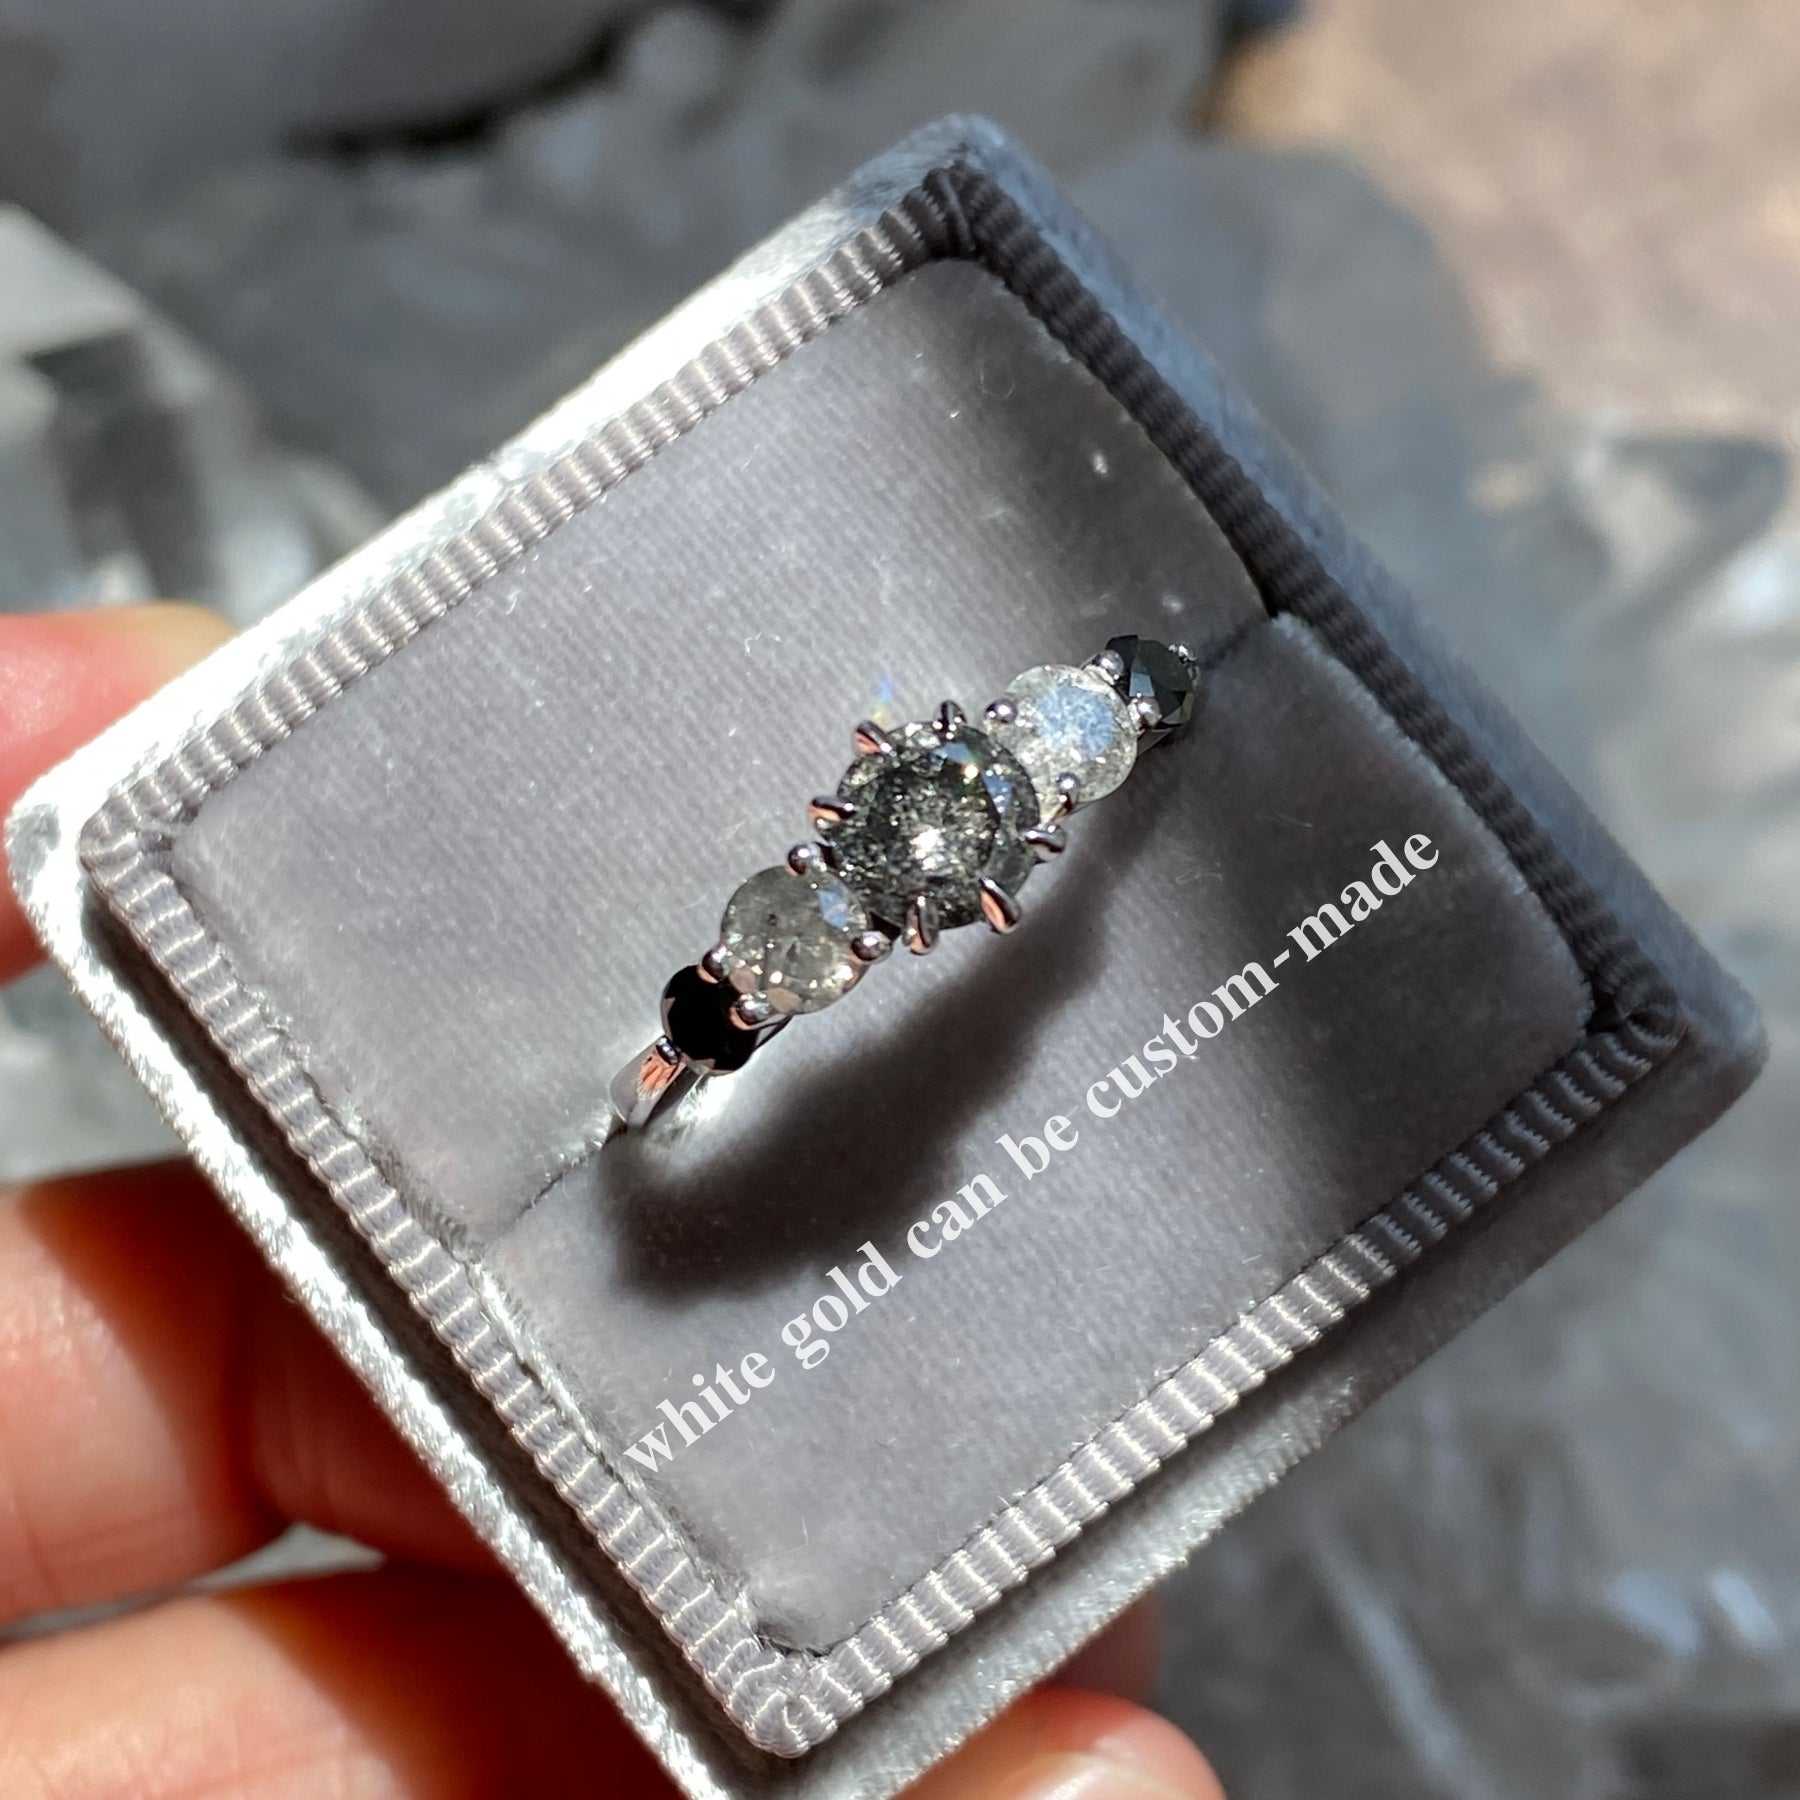 salt and pepper black diamond ring white gold 5 stone diamond ring la more design jewelry